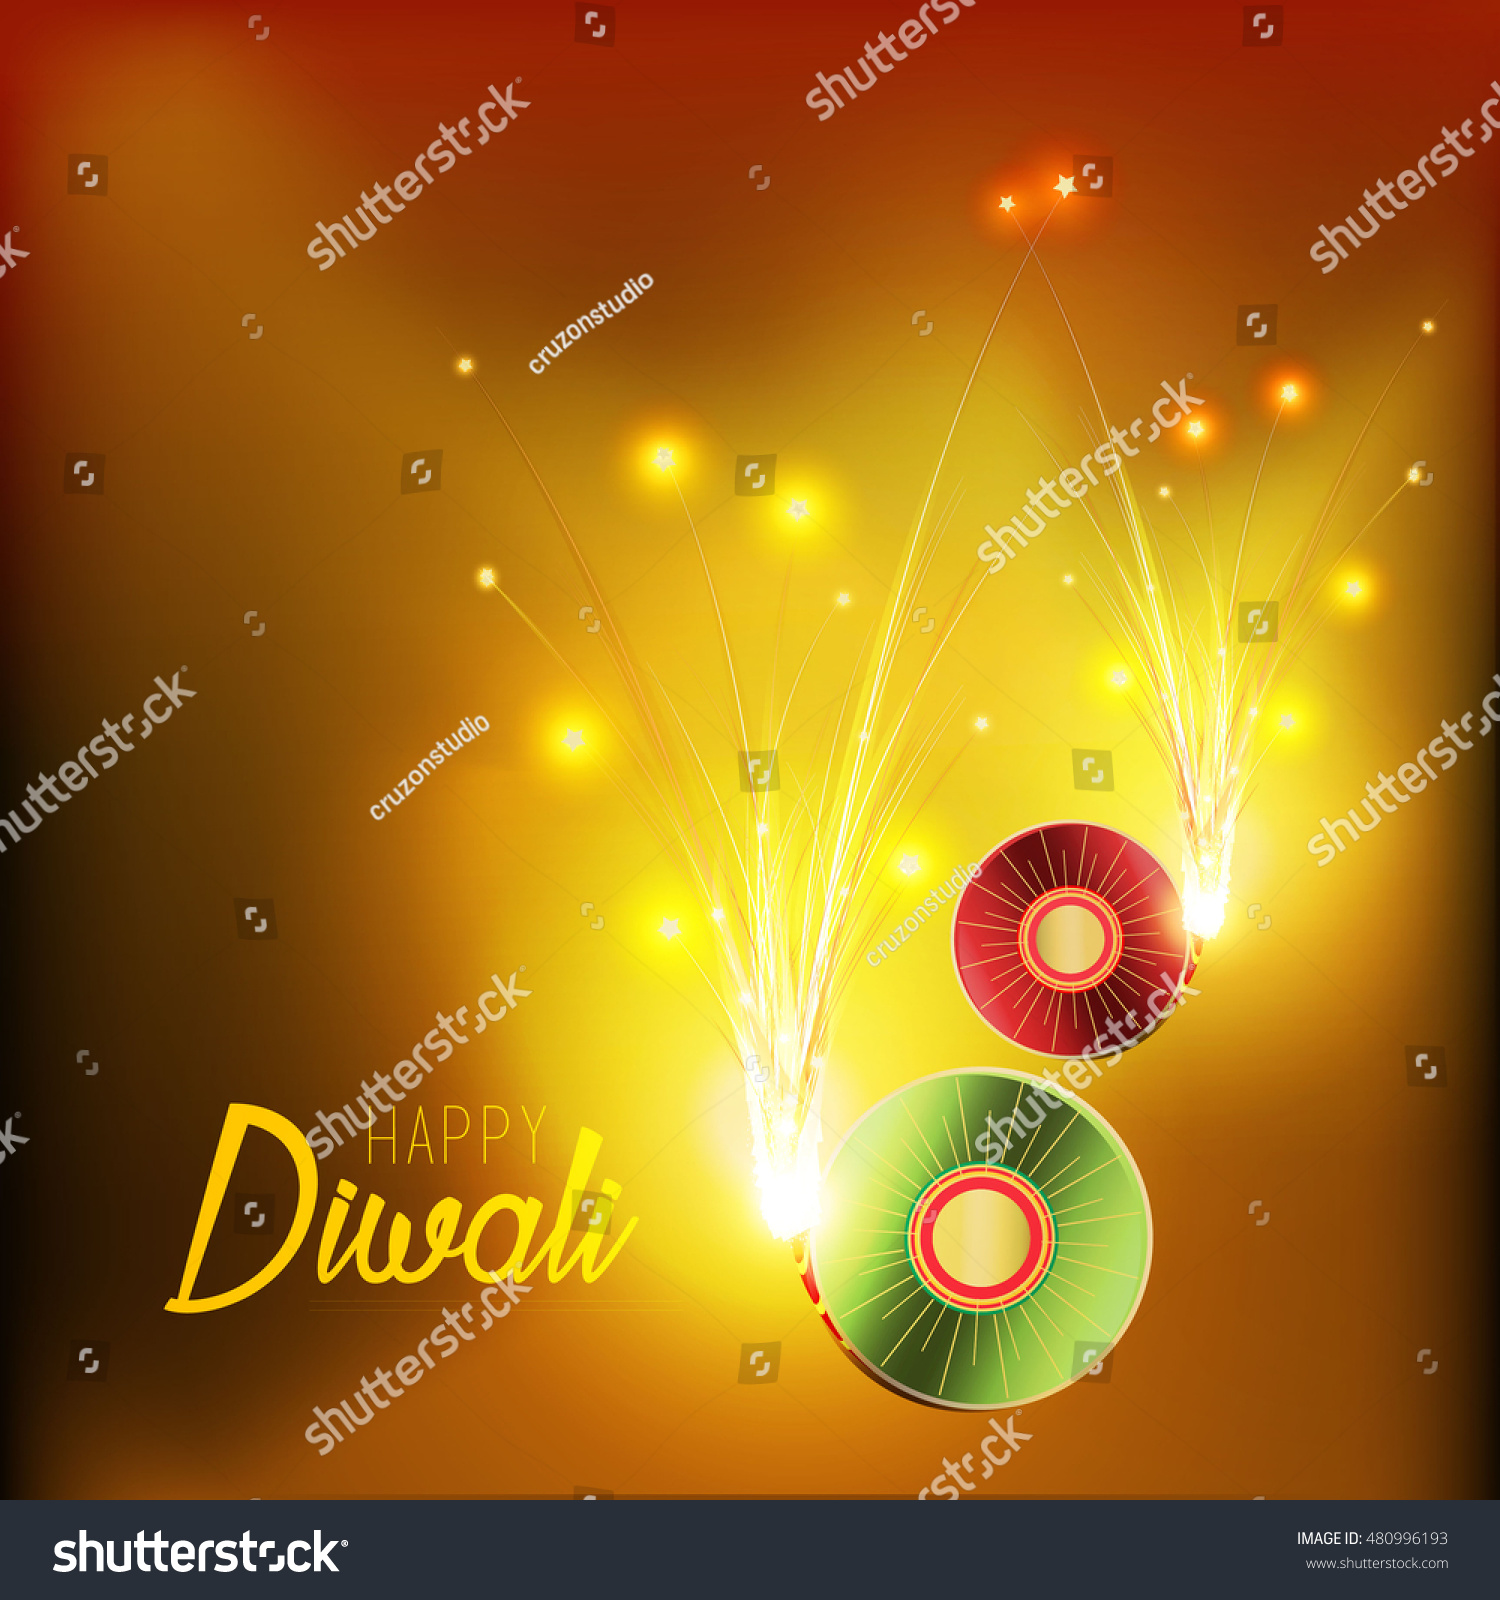 Happy Diwali Illustrationbeautiful Vector Background Diwali Stock